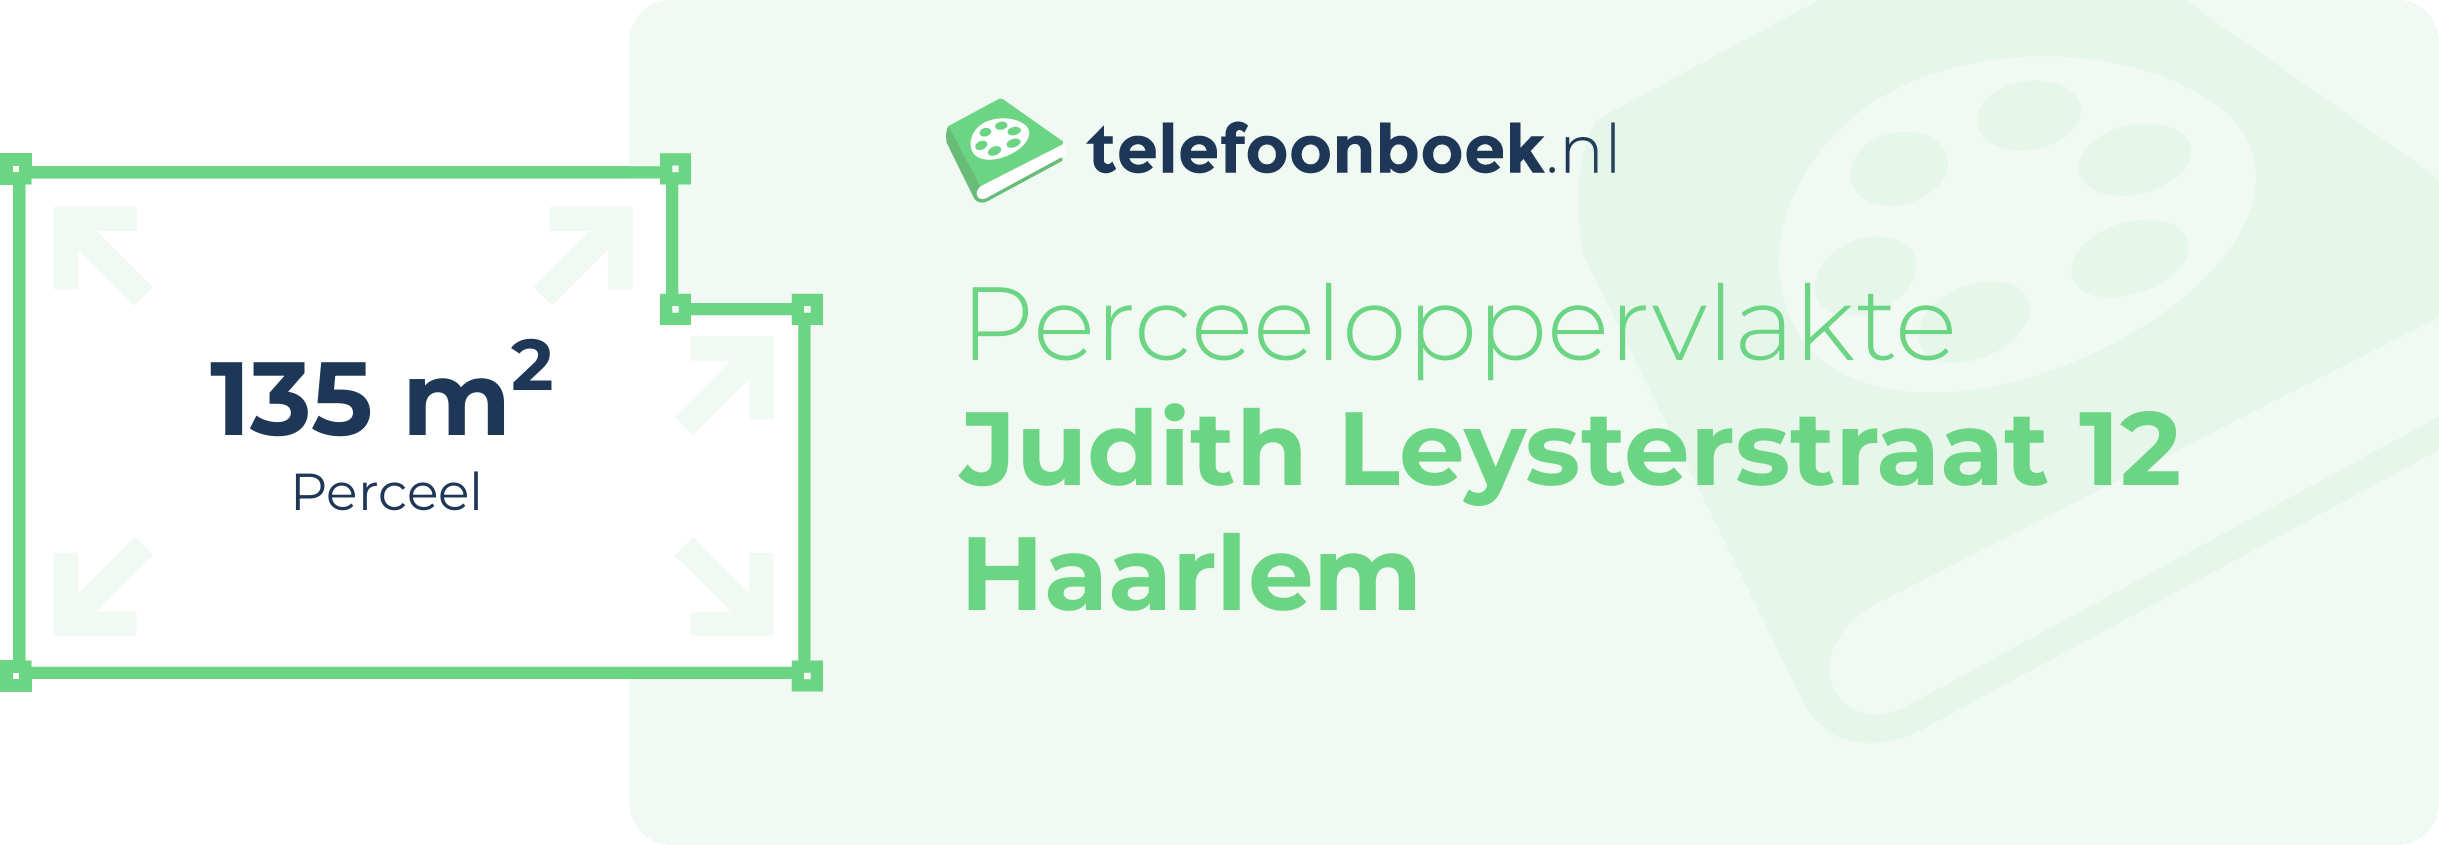 Perceeloppervlakte Judith Leysterstraat 12 Haarlem